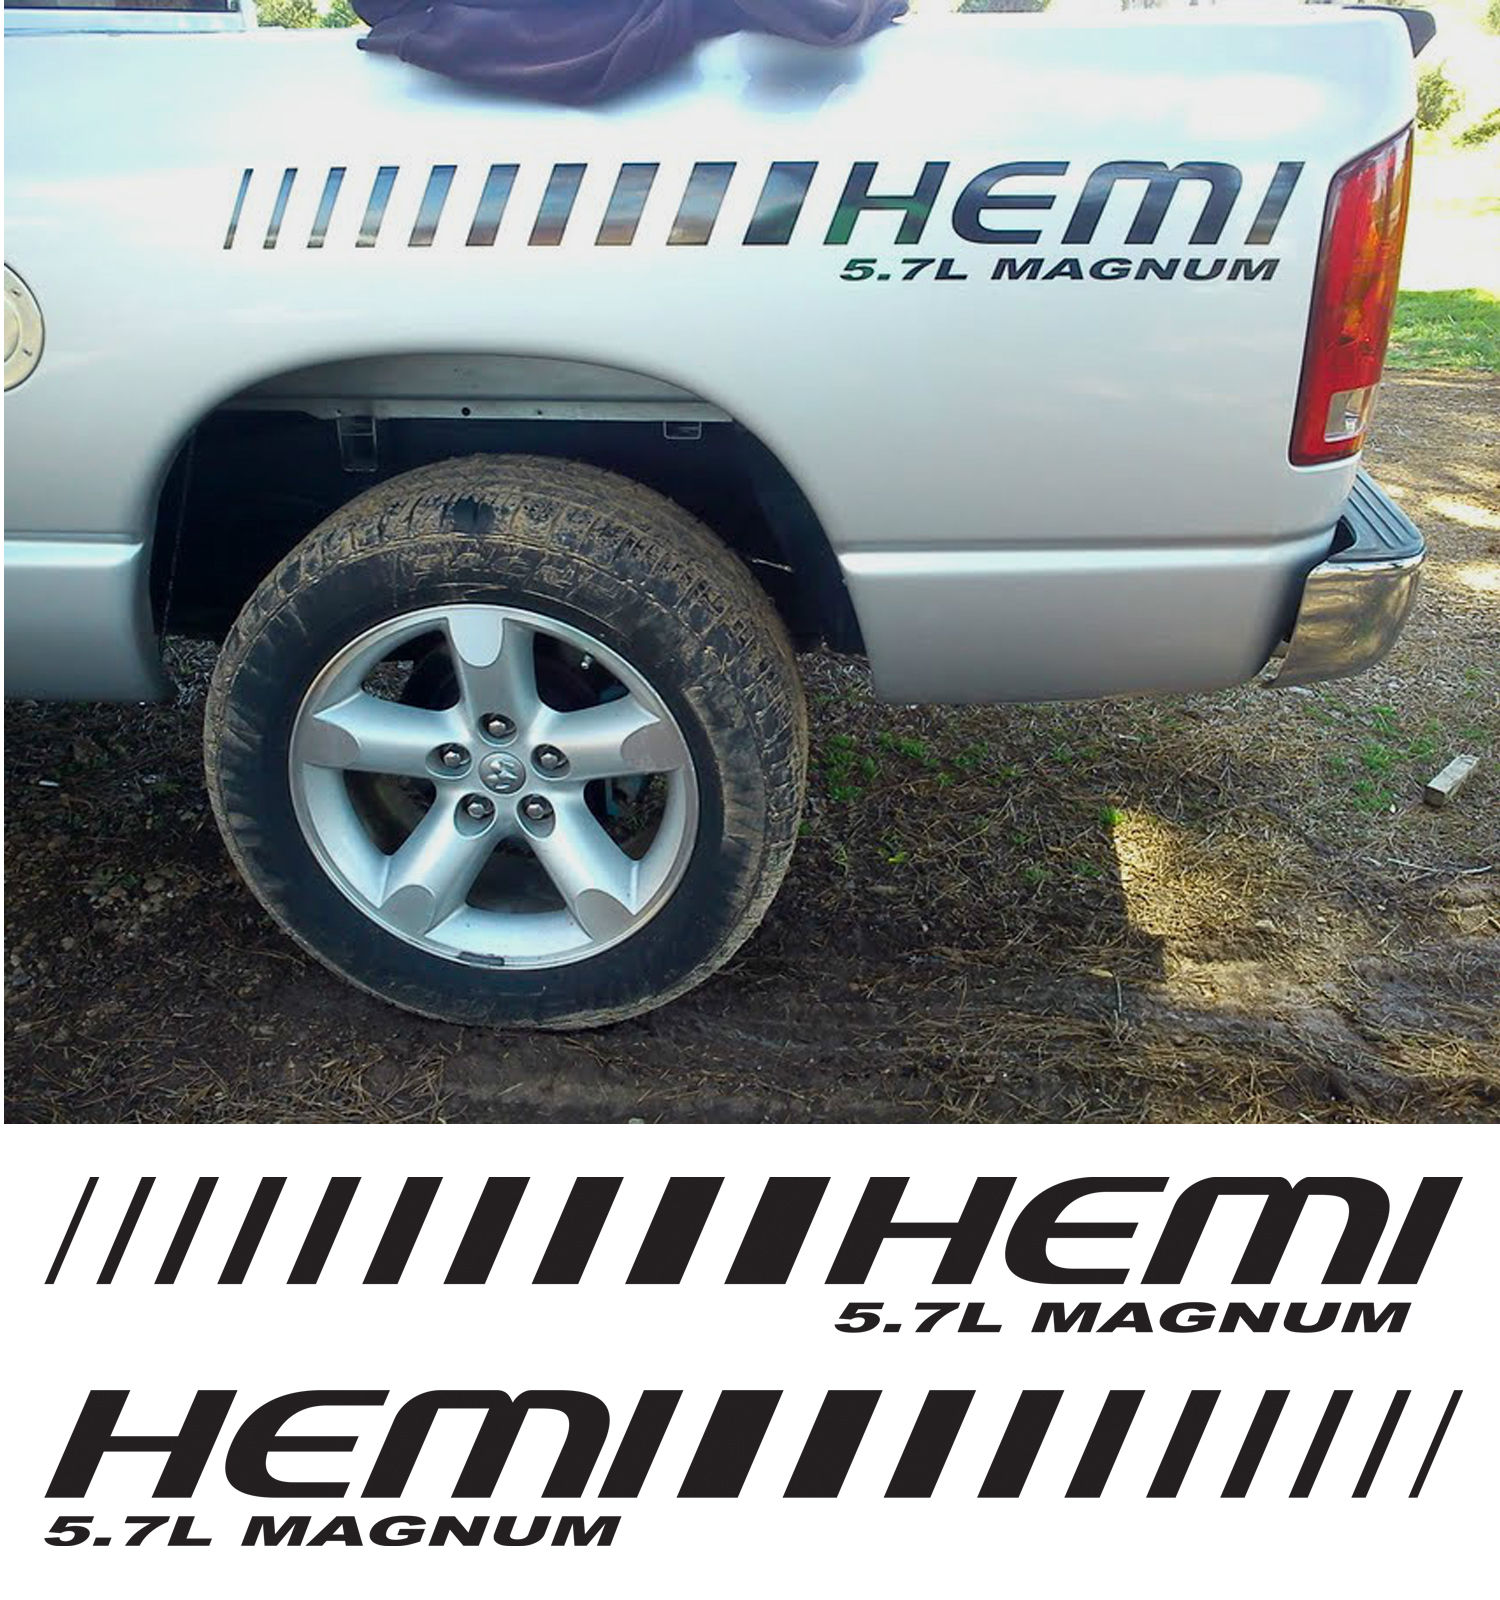 2 - Dodge HEMI 5.7 MAGNUM Ram Truck Decals Stickers